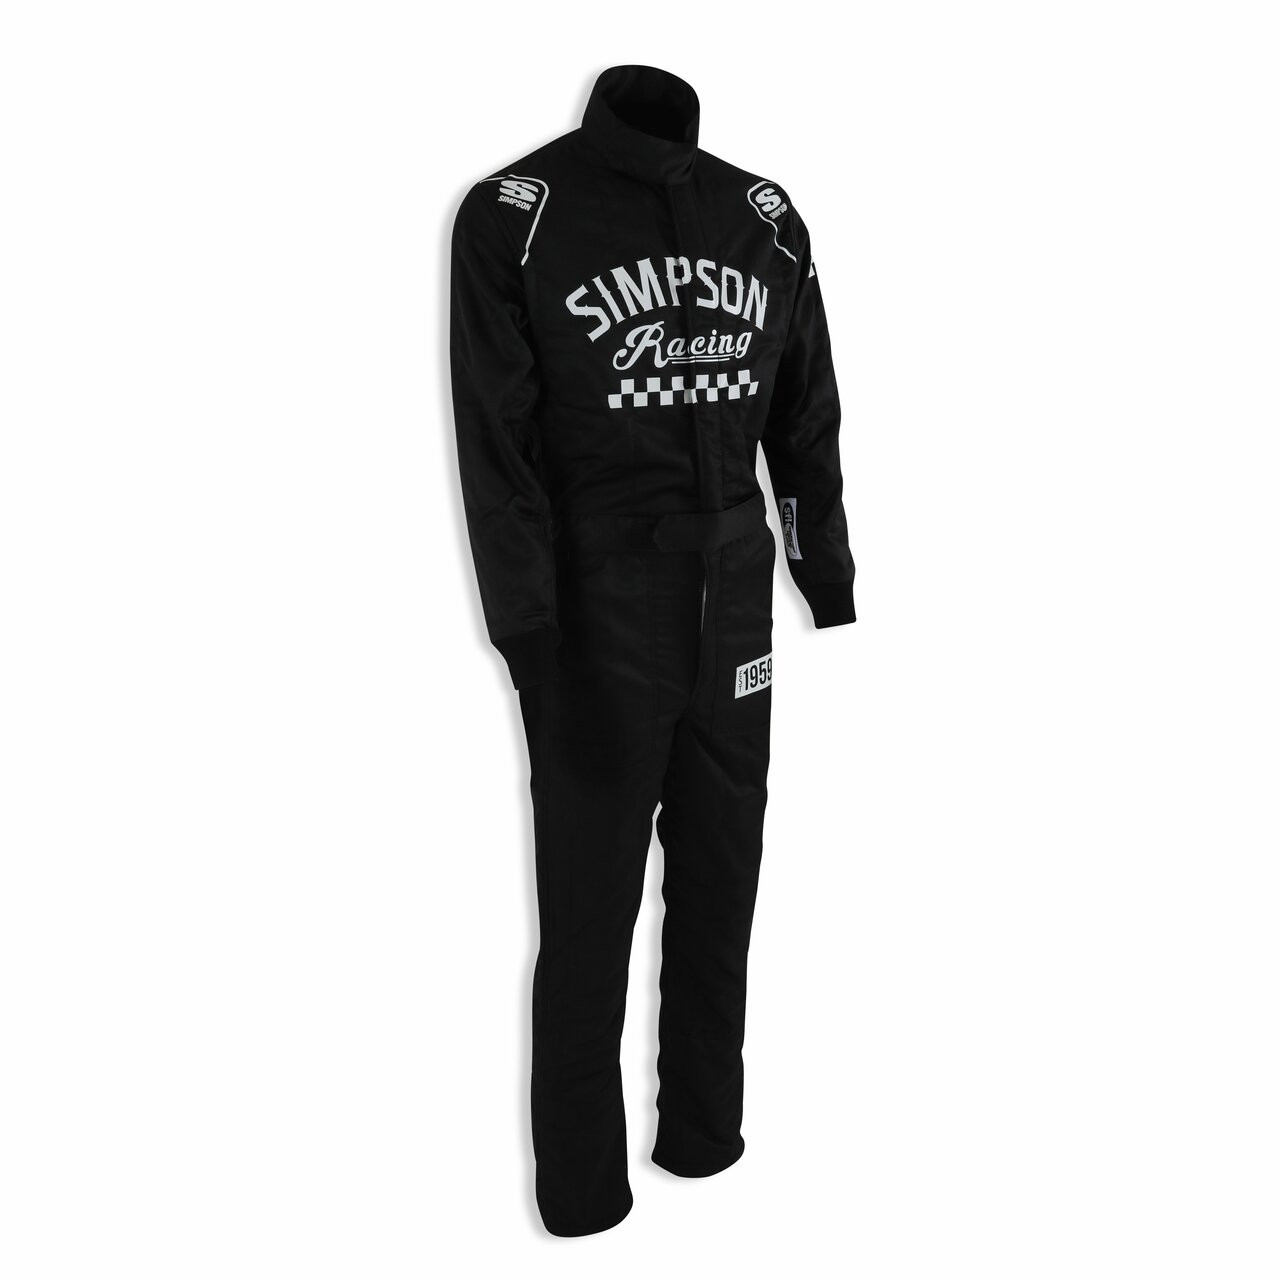 Simpson Adult Checkers Racing Suit Sfi 5 Black